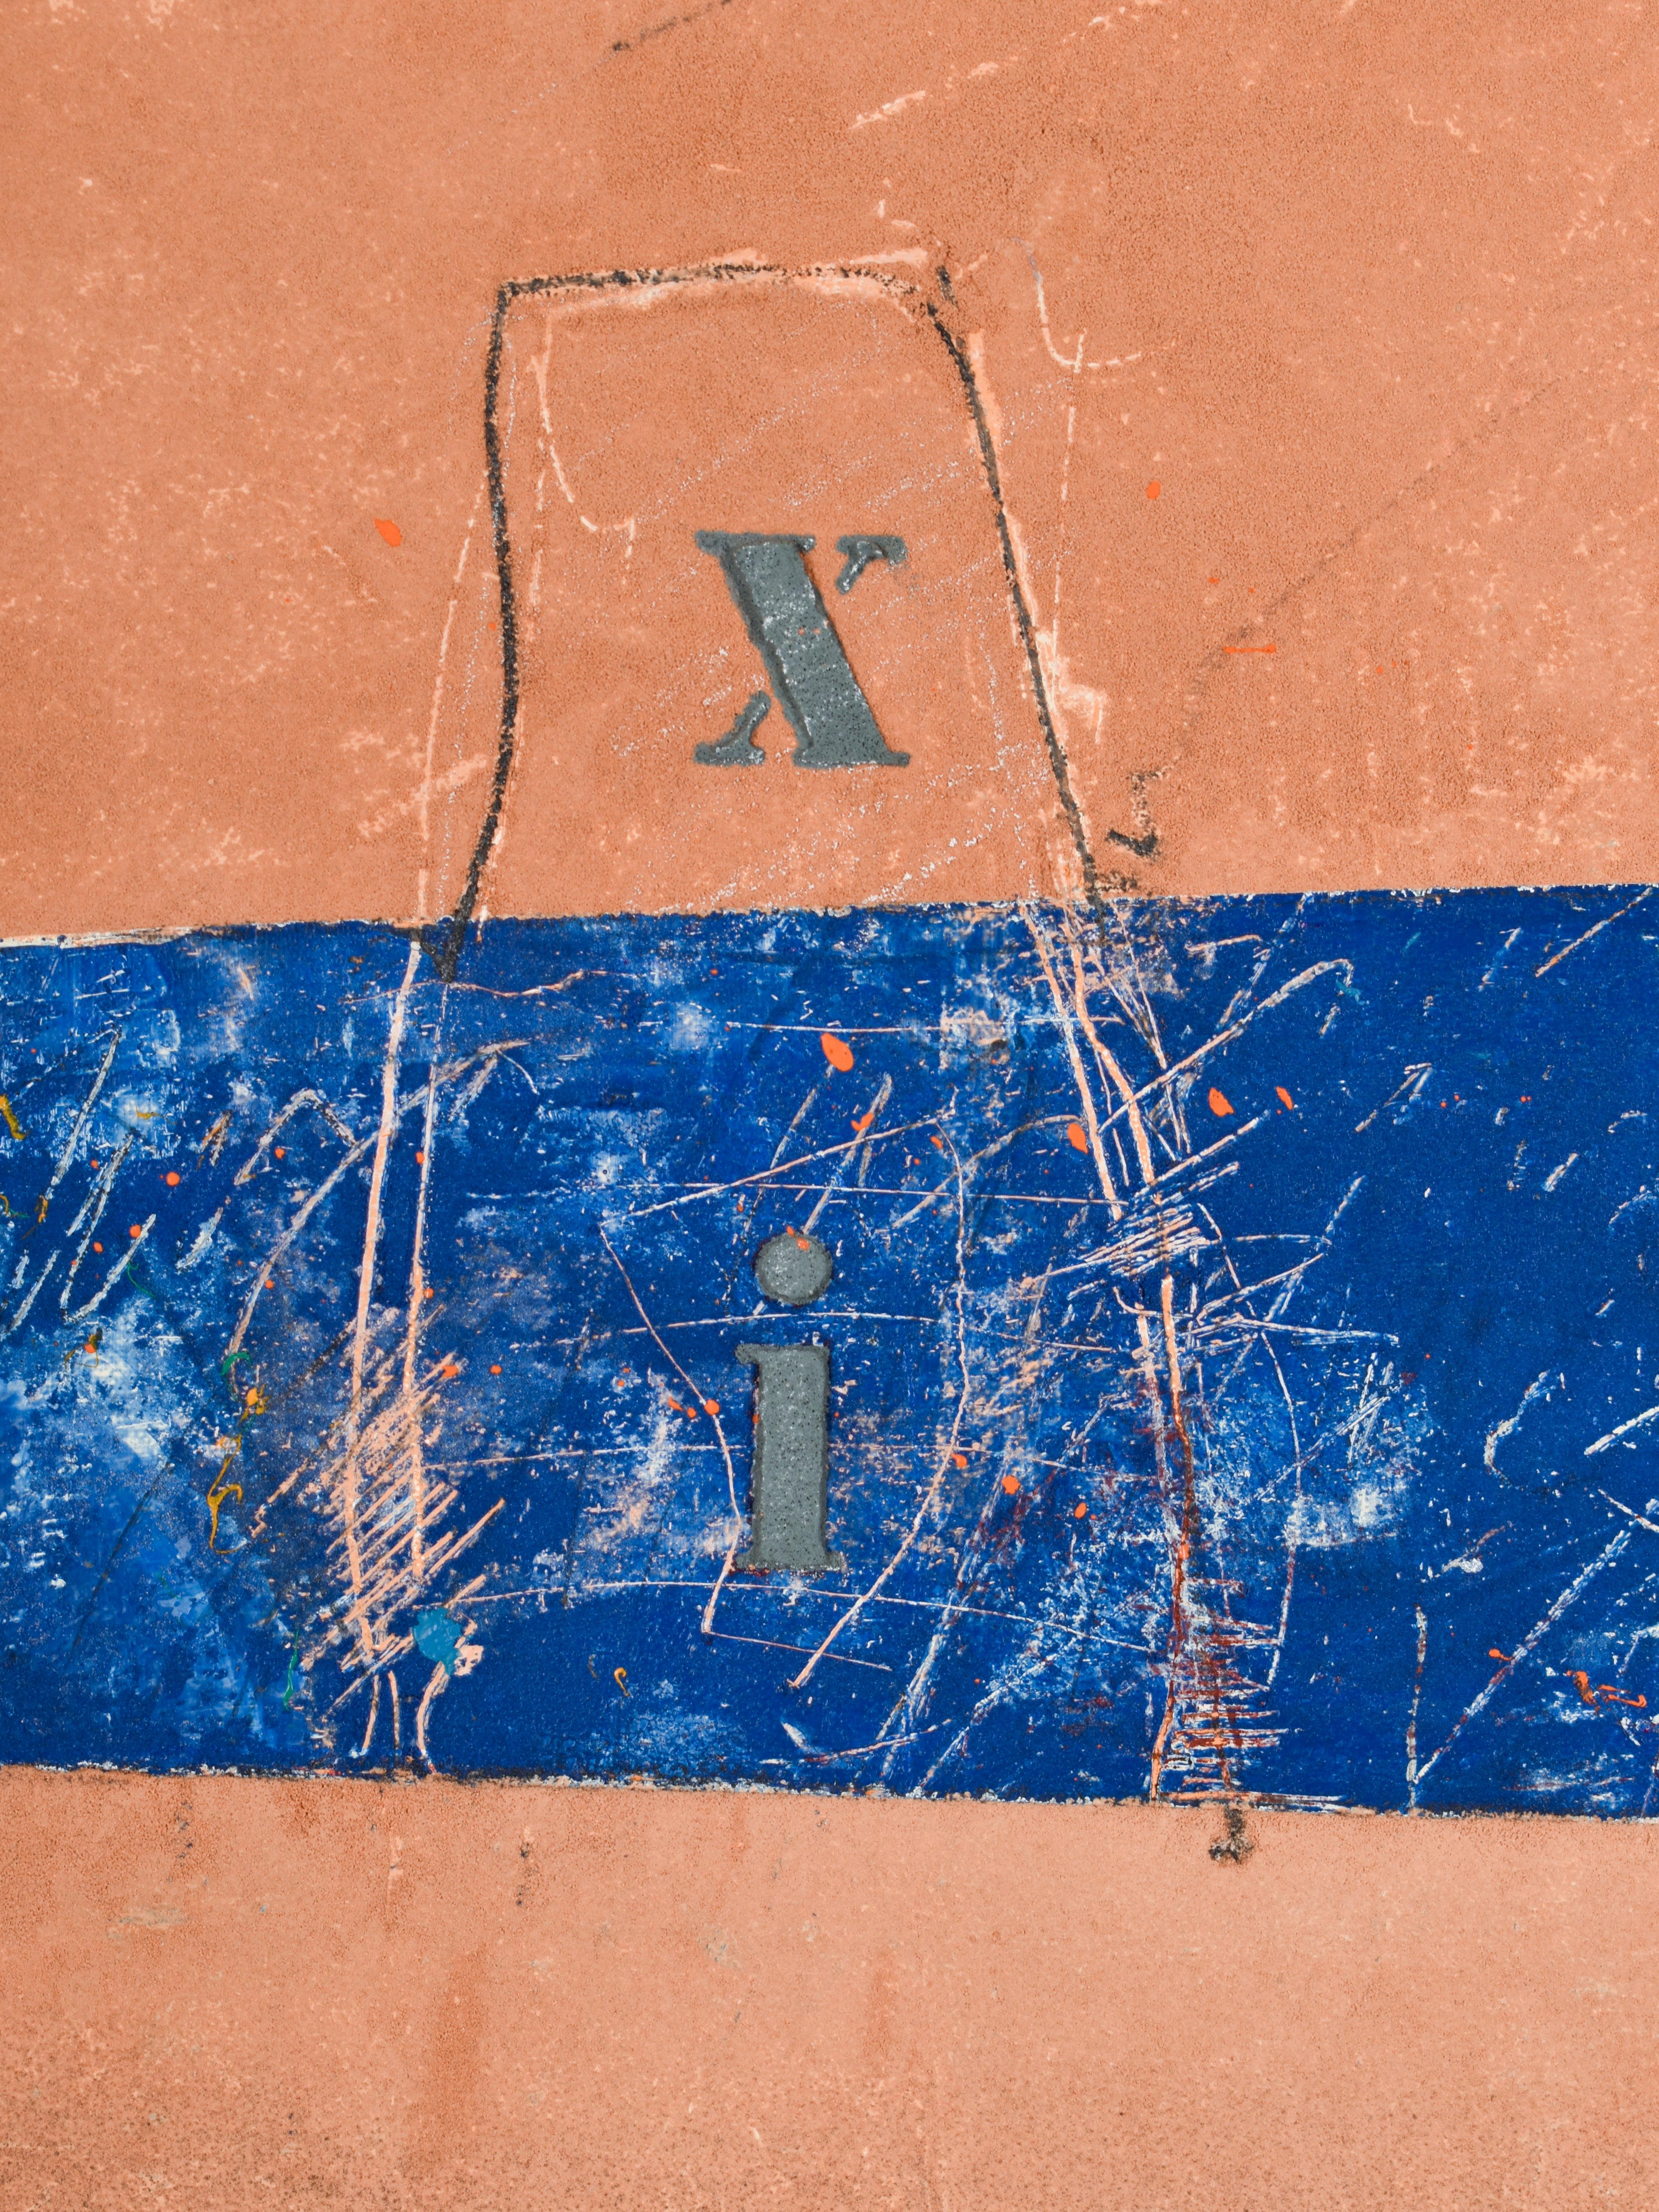 XI Blue -  Cole Morgan - Mixed Media on canvas - Original -  For Sale 5